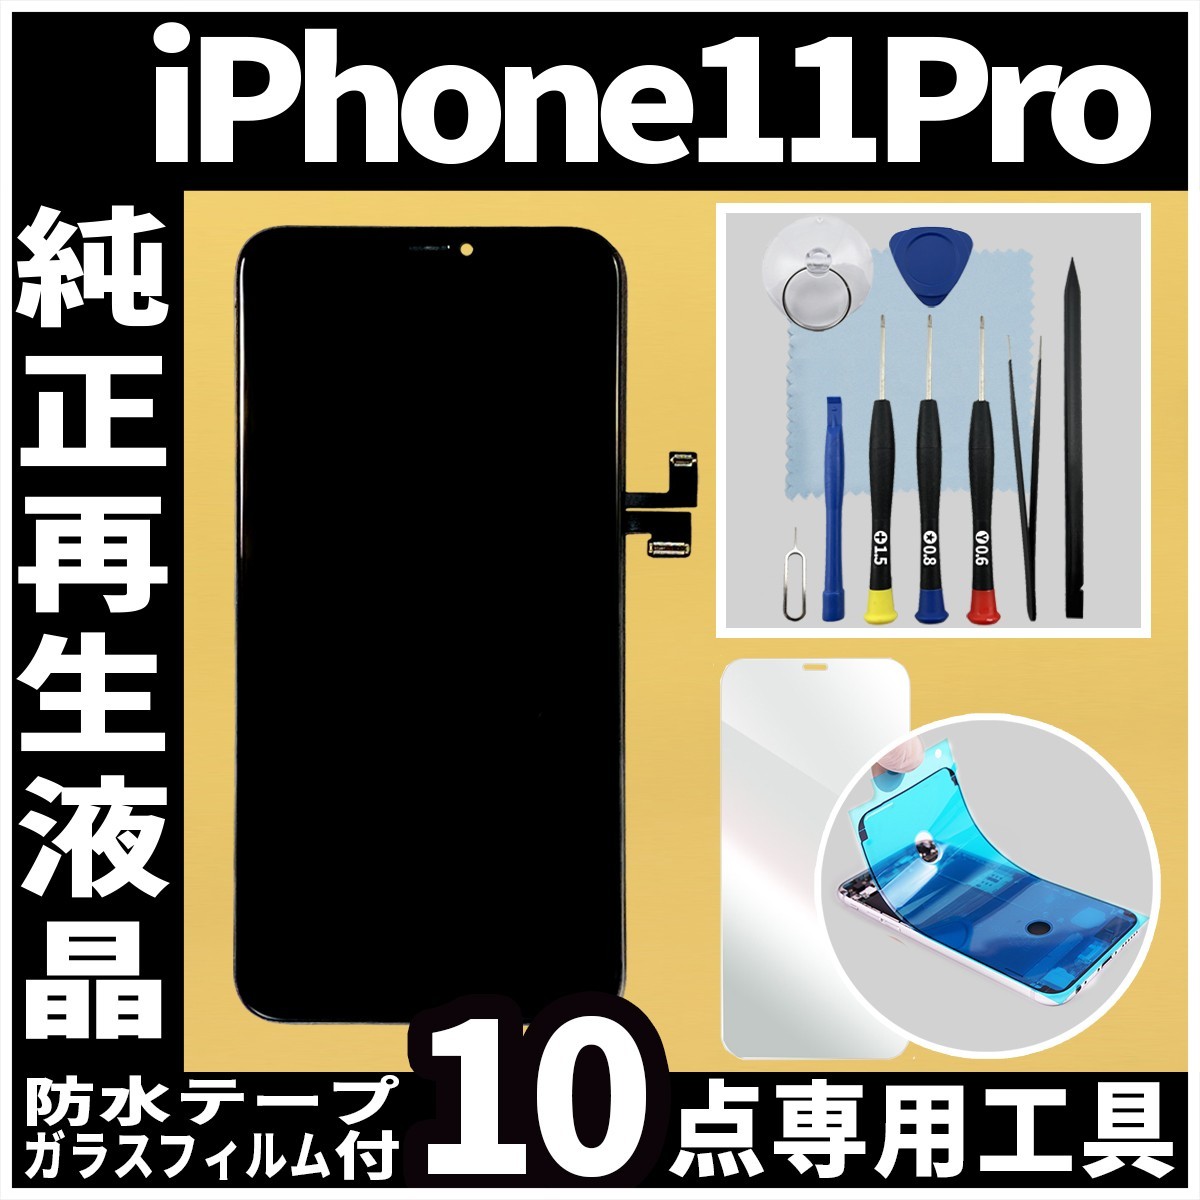 iPhone11Pro フロントパネル 純正再生品 防水テープ 純正液晶 修理工具 再生 リペア 画面割れ 液晶 修理 iphone ガラス割れ ディスプレイ